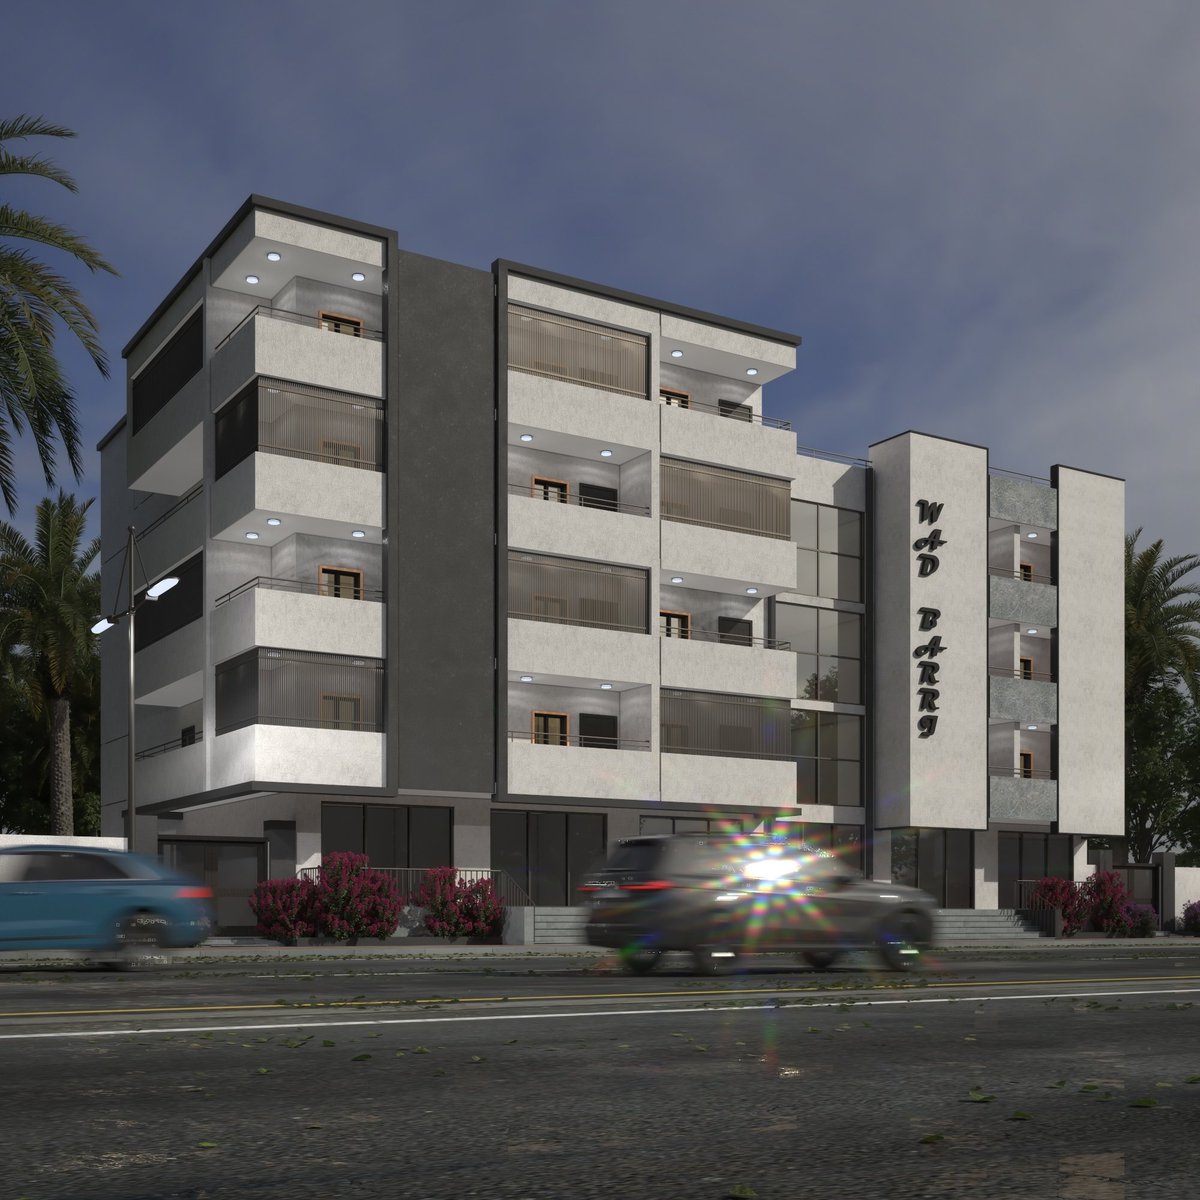 الحمد لله 🤍

COMMERCIAL BUILDING
Modern 
area 540 m²  

Revit + 3 d s m a x  +  v r a y

#architecture #art #3dsmax #vray #vraynext #house #villa #architect #design #commercialbuilding #art #render